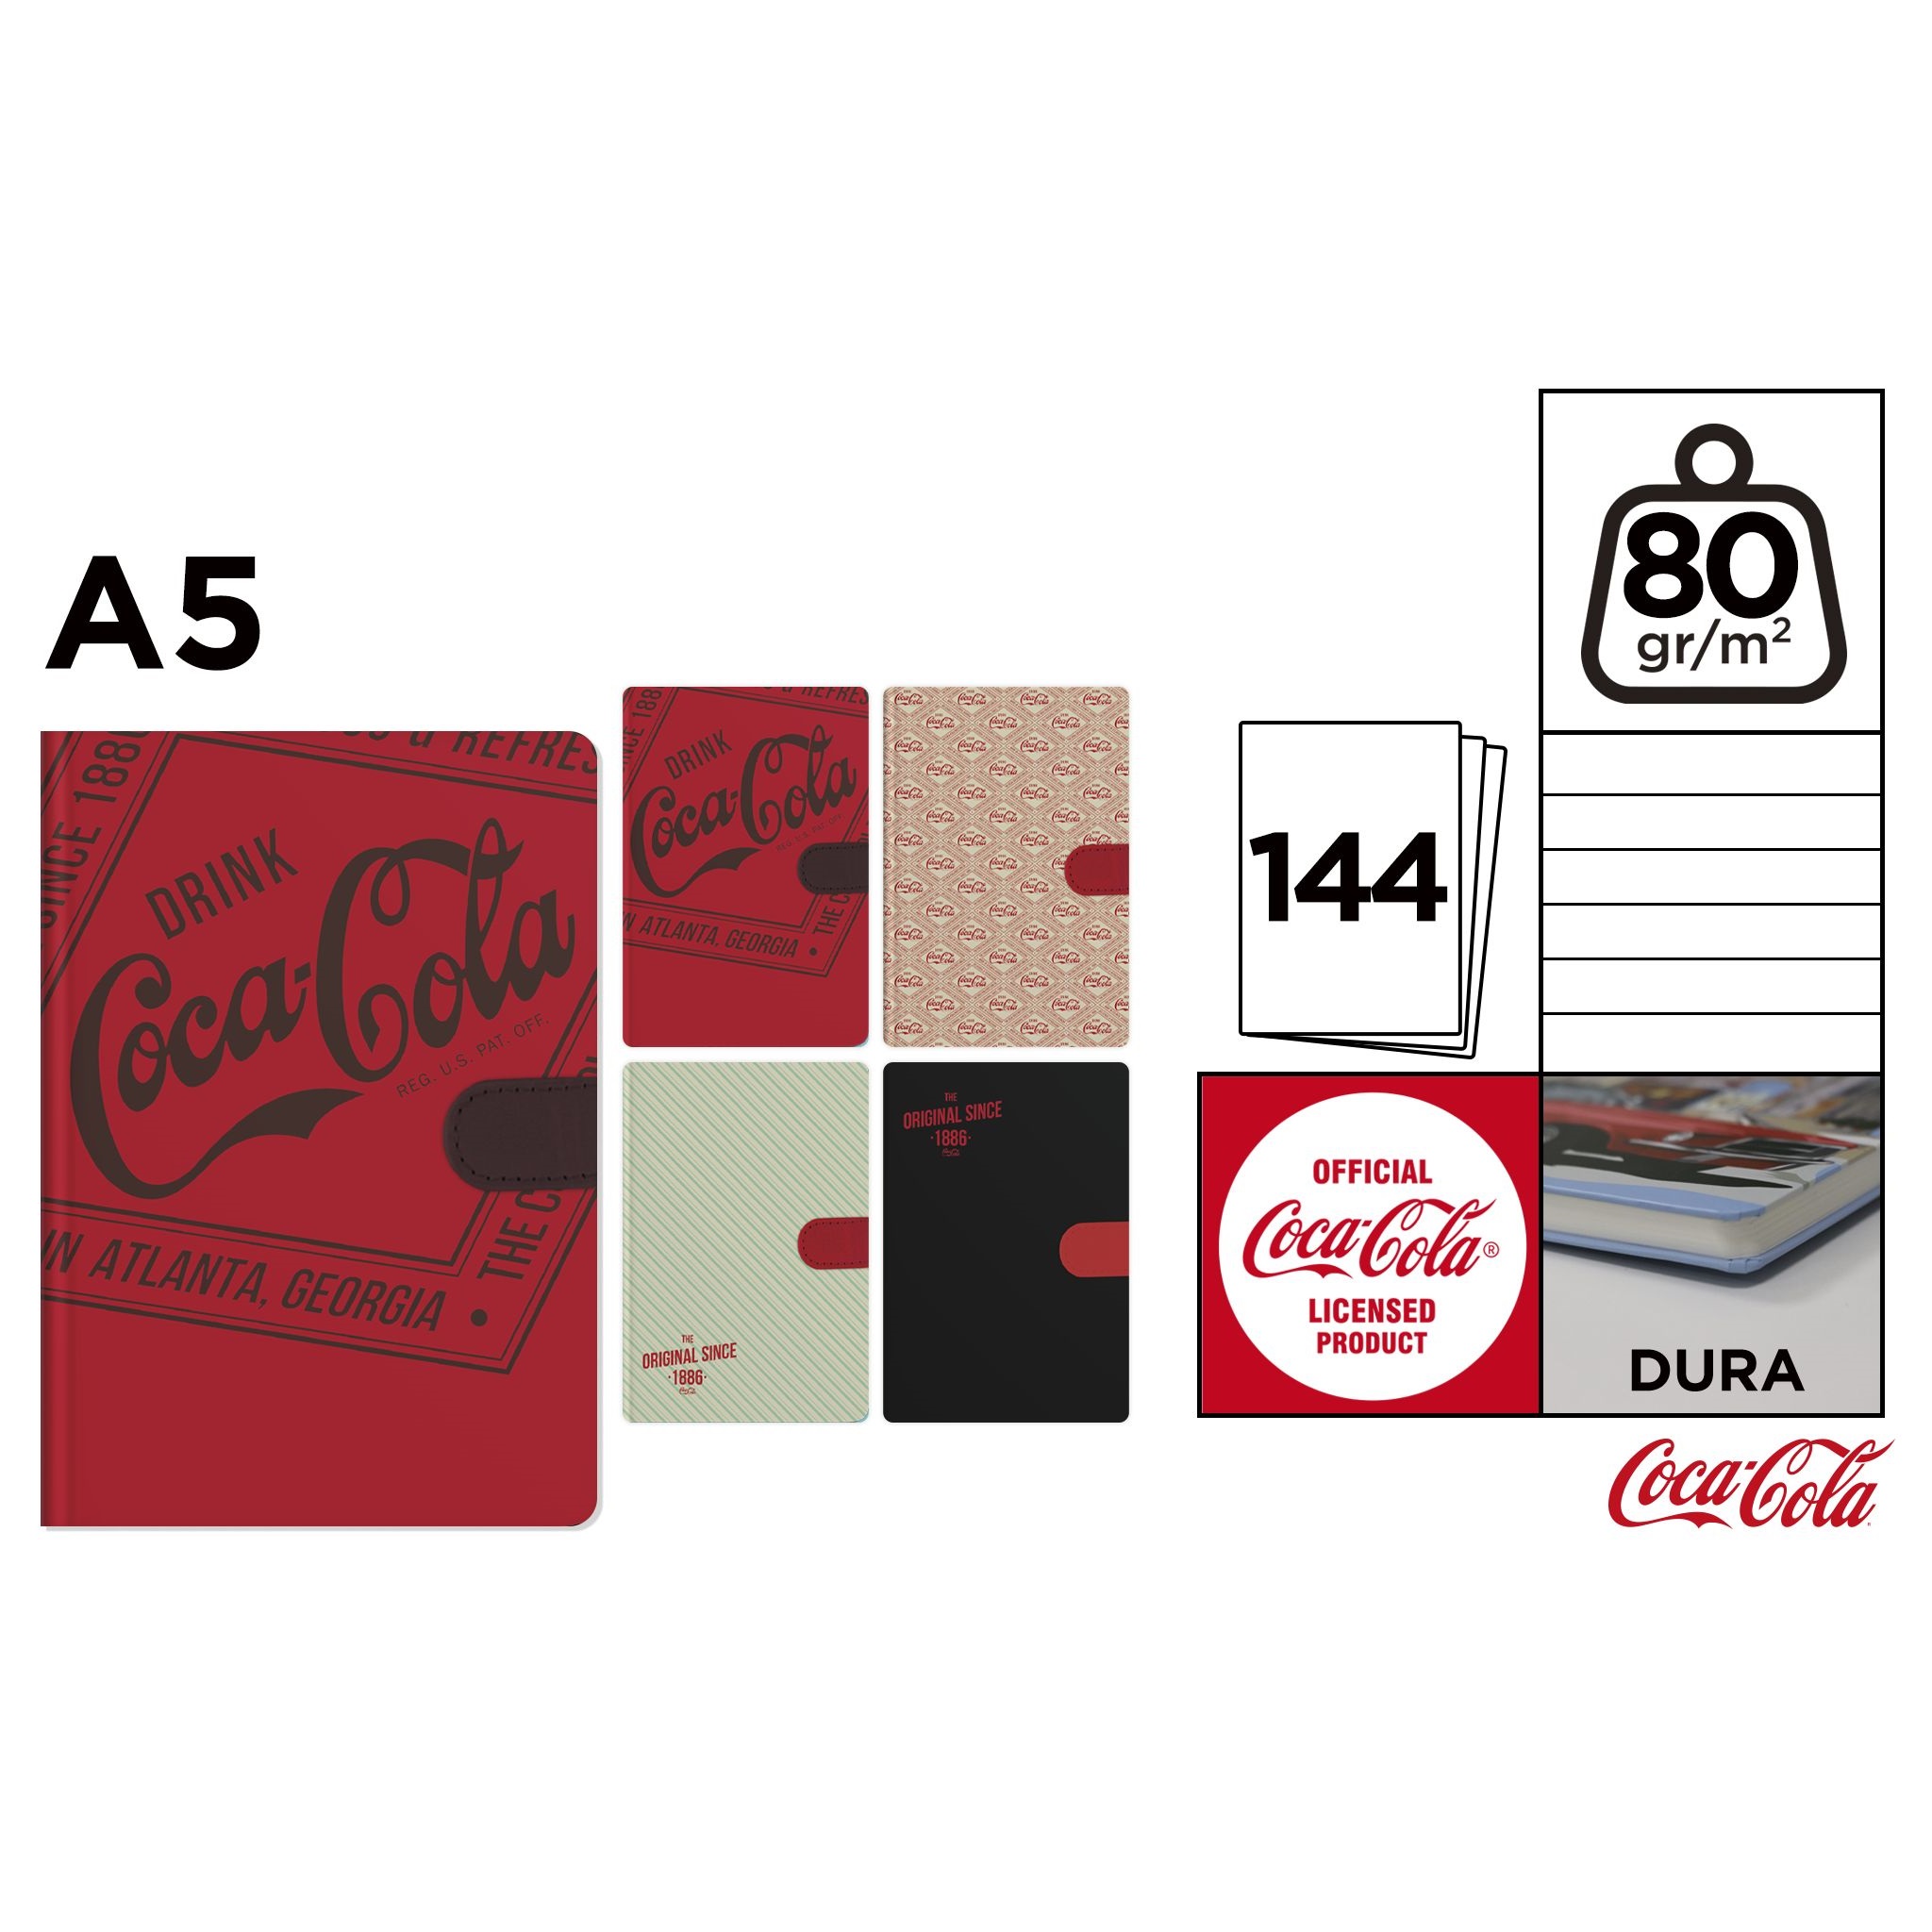 CC023 Coca-Cola Hardcover Notebook Hardboard Cover Notebook kalawan Buckle Notebook